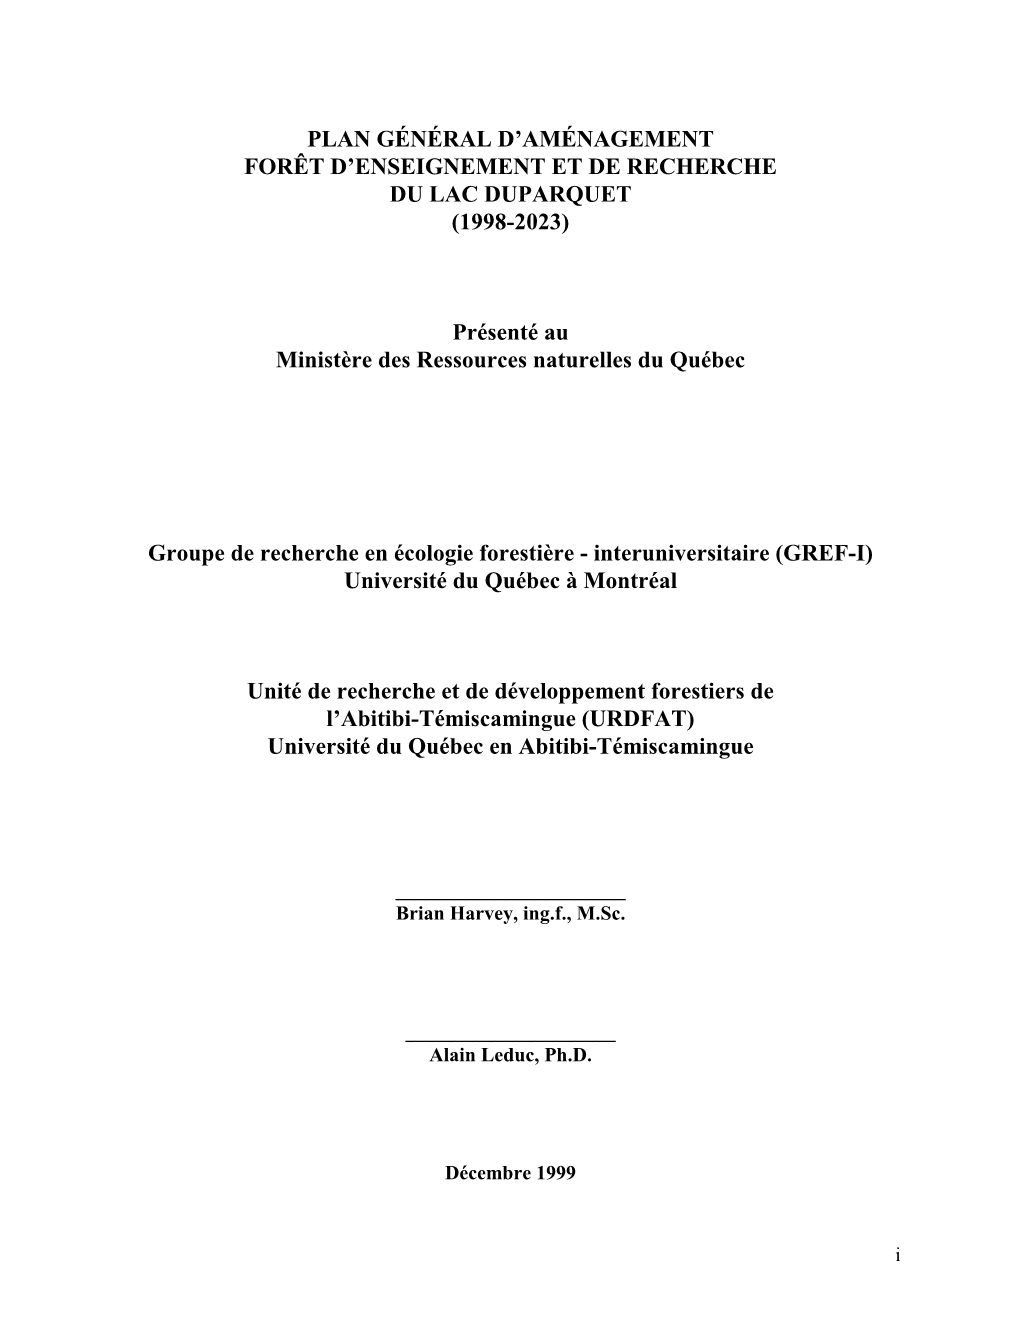 Plan Général D'aménagement FERLD (1998-2023)